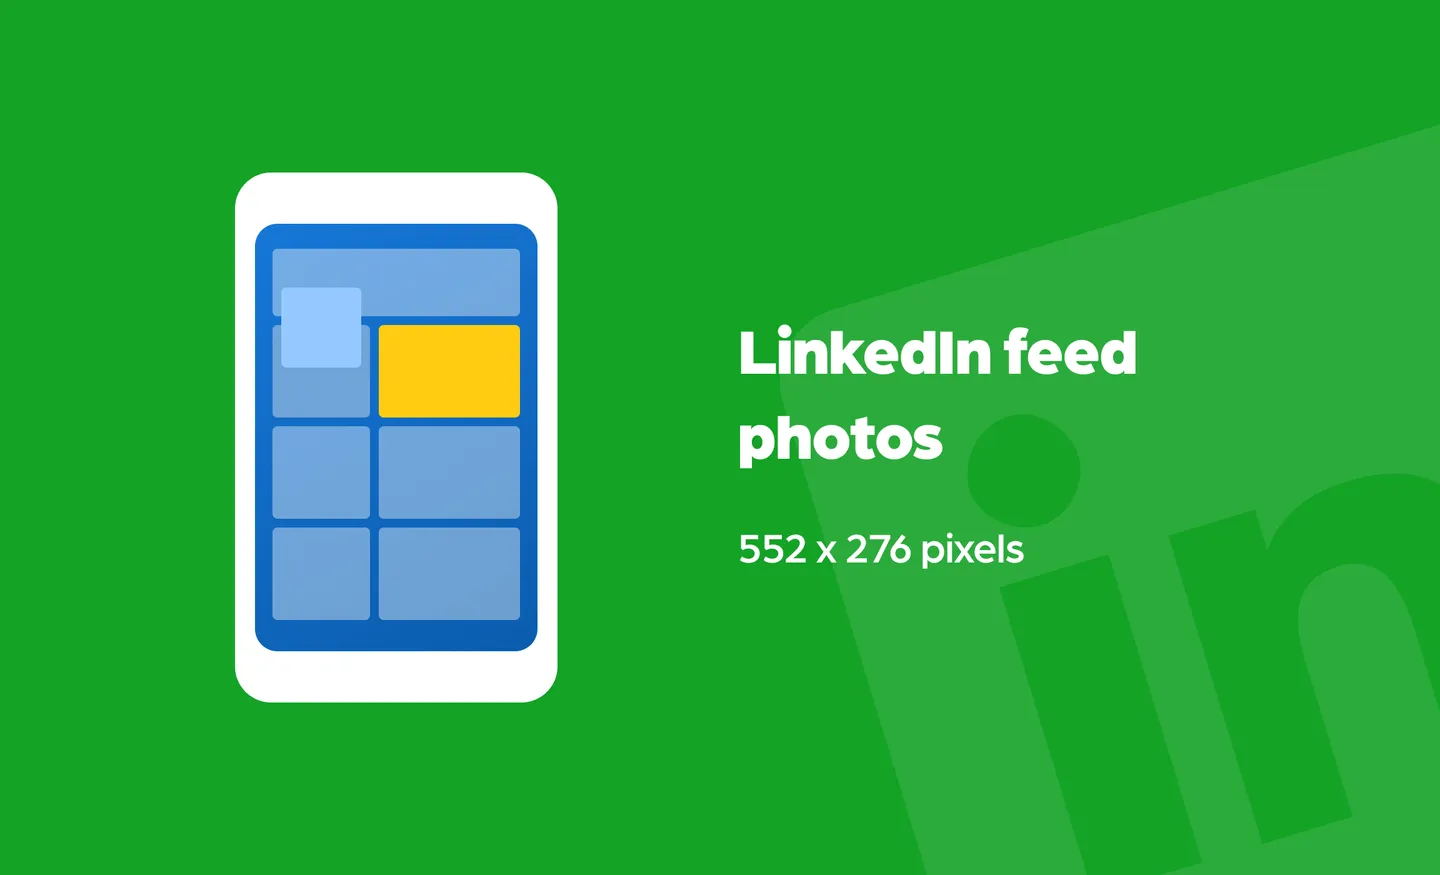 LinkedIn feed photo size